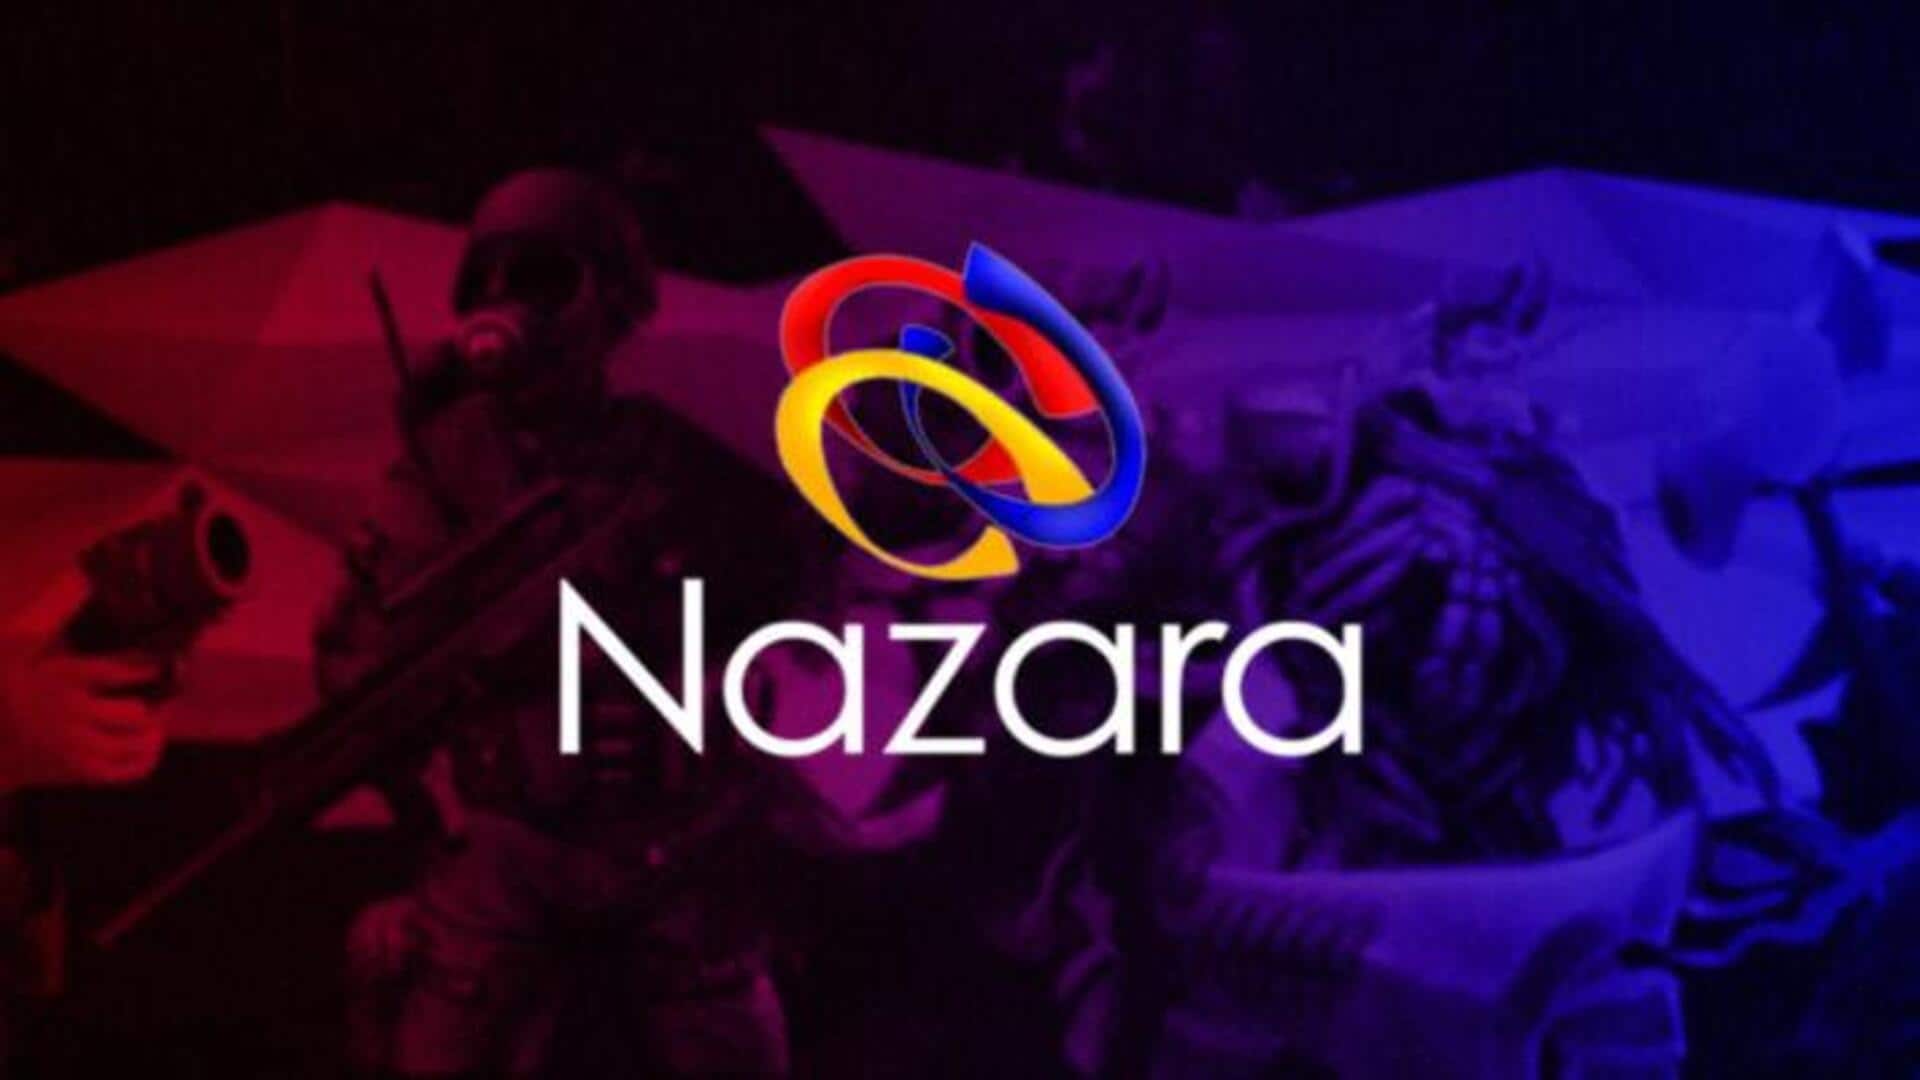 Nazara Tech promoter offloads 6% stake to address liquidy needs  